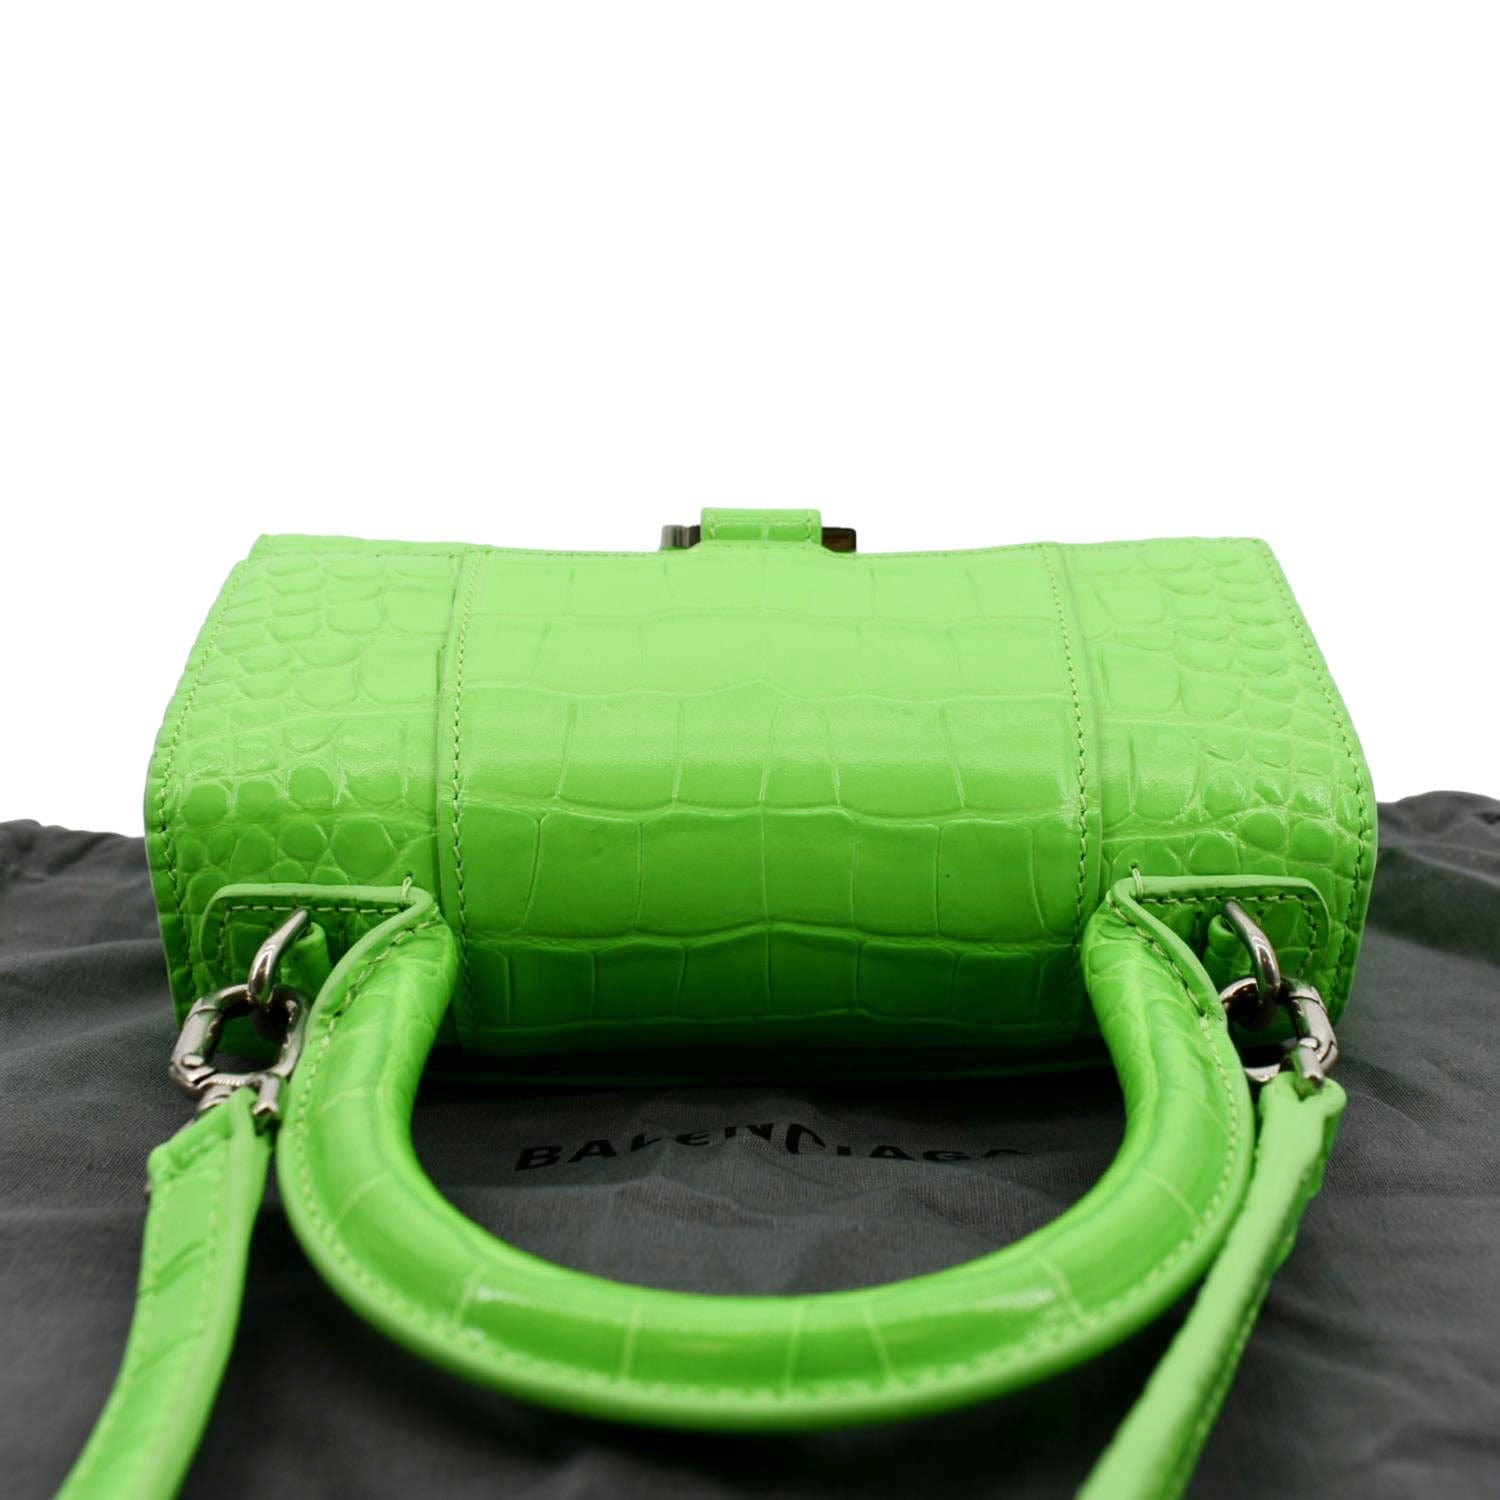 Balenciaga Hourglass Small Top Handle Bag - Green